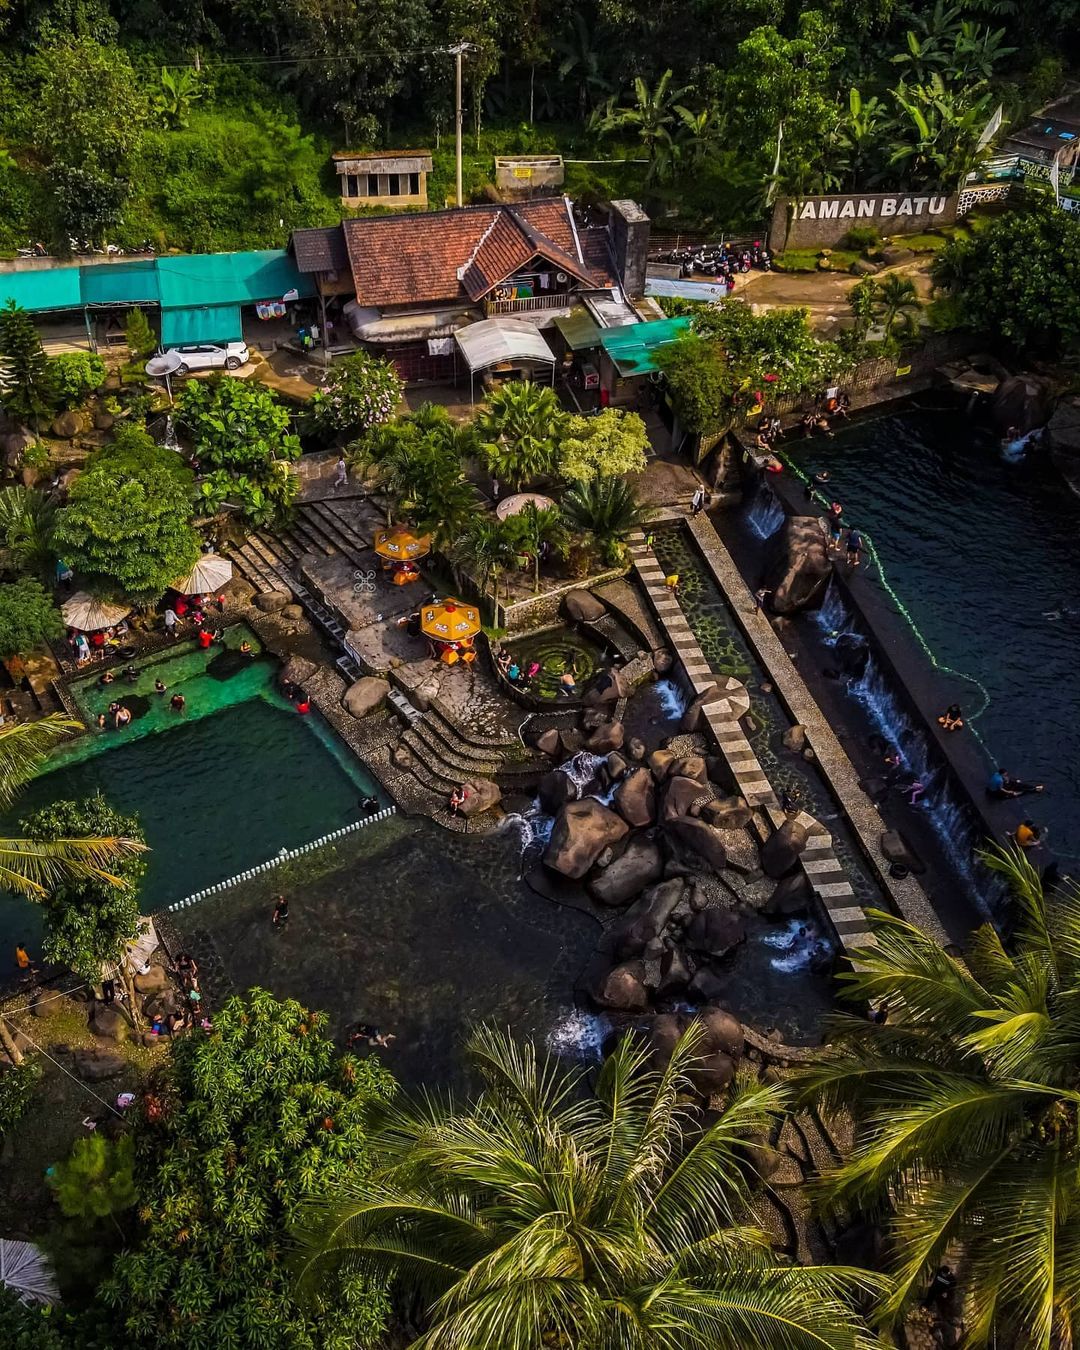 Wisata Taman Batu Purwakarta Dilihat Dari Atas Image From @purwakartaendah